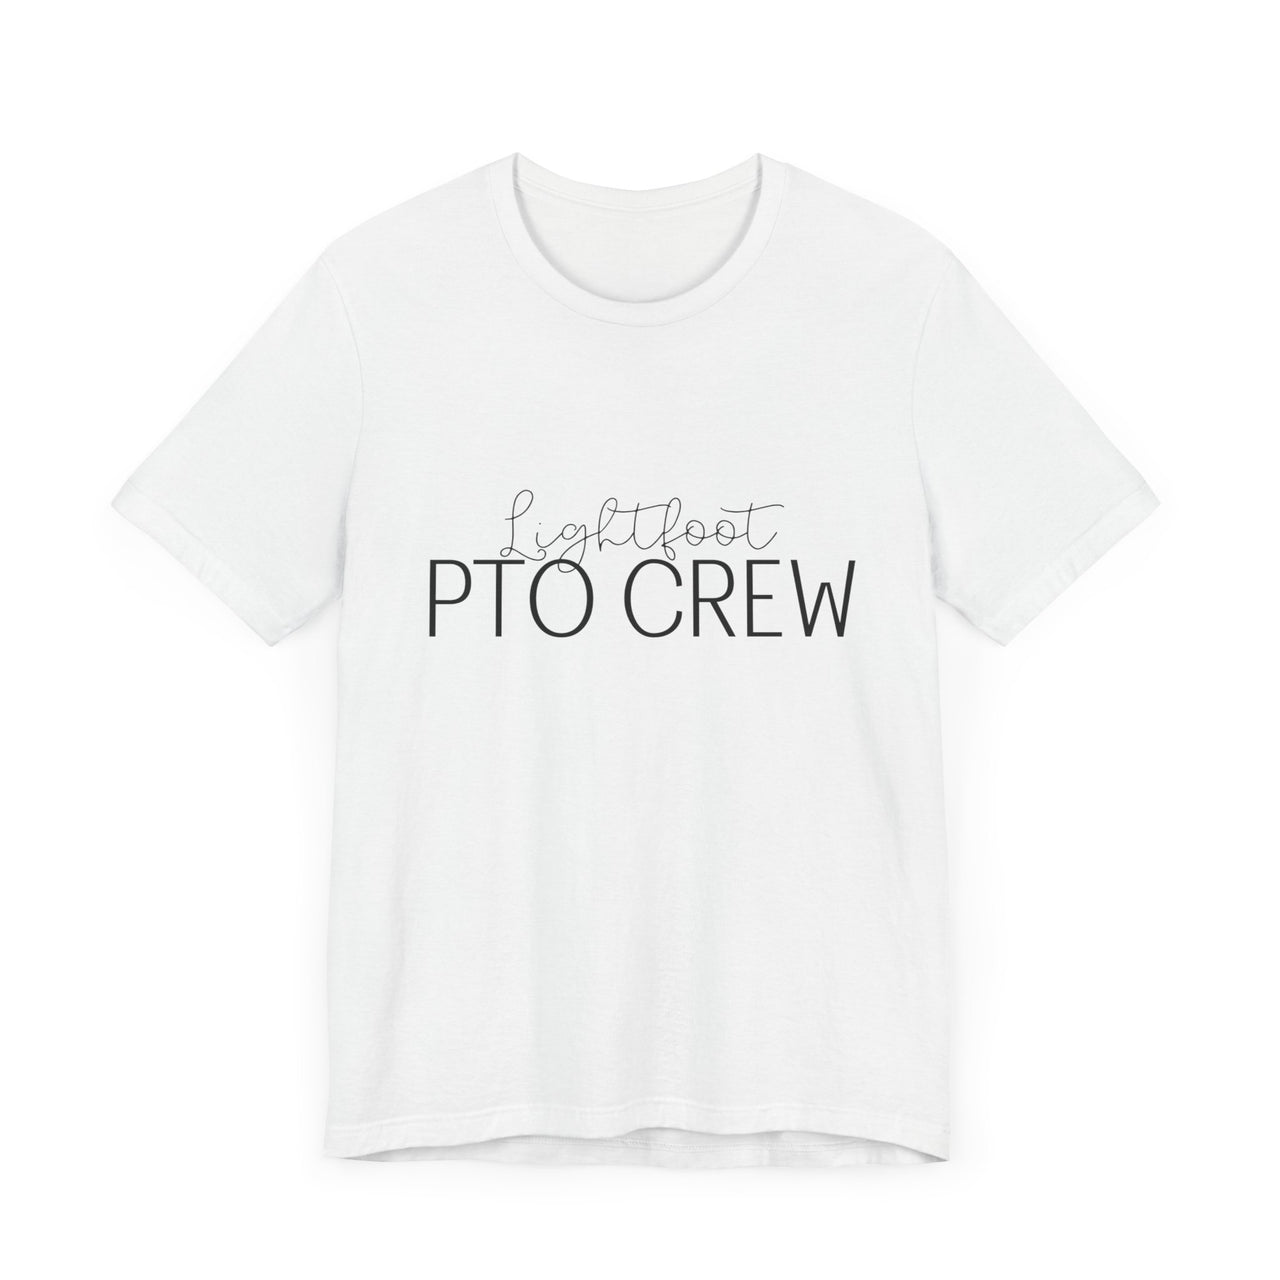 Lightfoot PTO Crew Short Sleeve White Tee